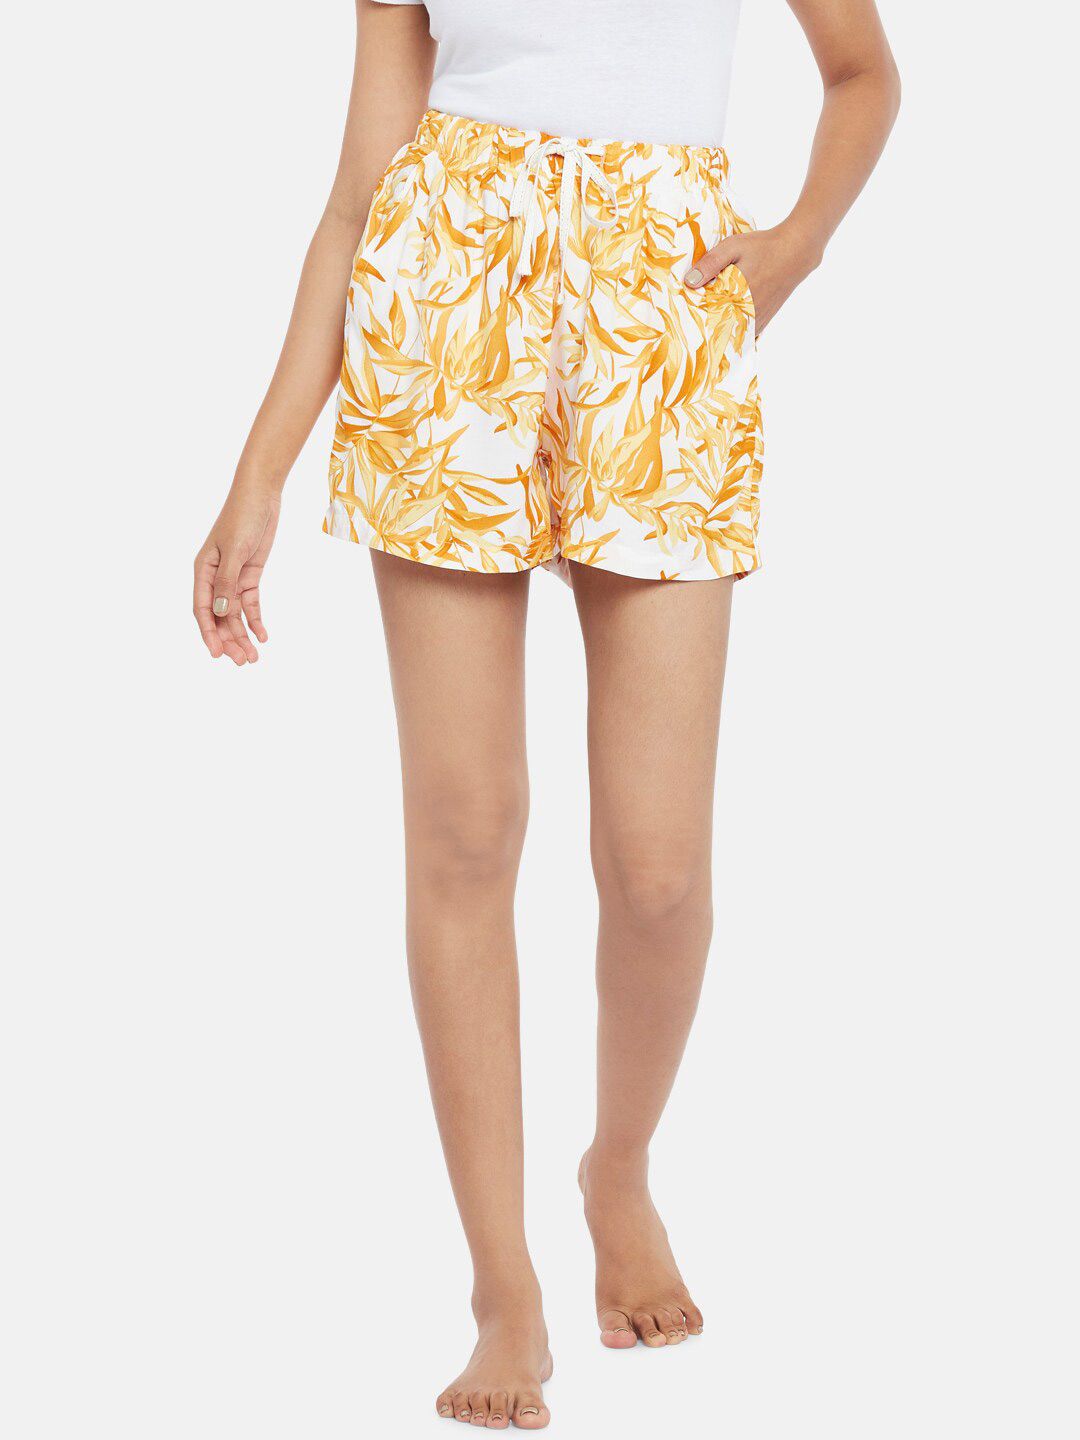 Dreamz by Pantaloons Women Orange & White Printed Lounge Shorts Price in India